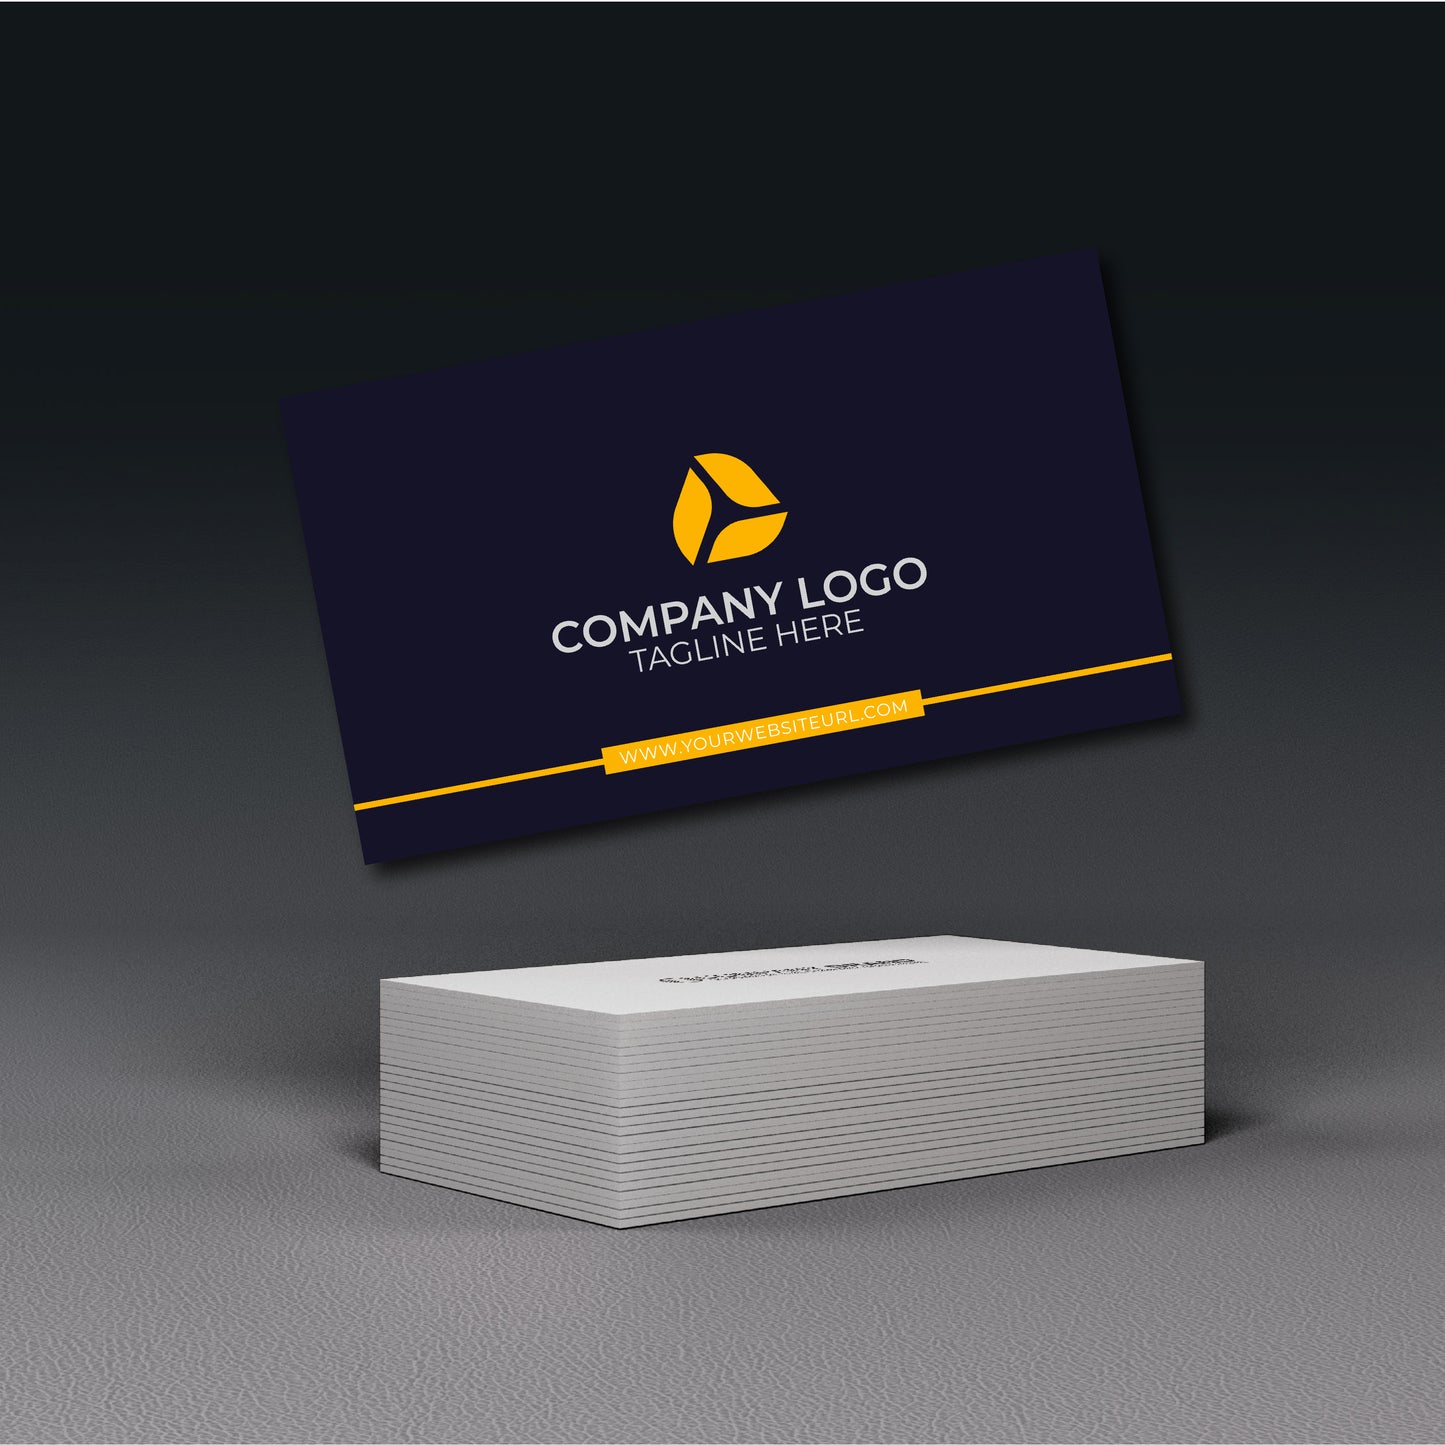 Elegant Luxury Yellow and White custom business cards, 500 pcs Business cards, real state business cards, personalized business cards, customized business cards